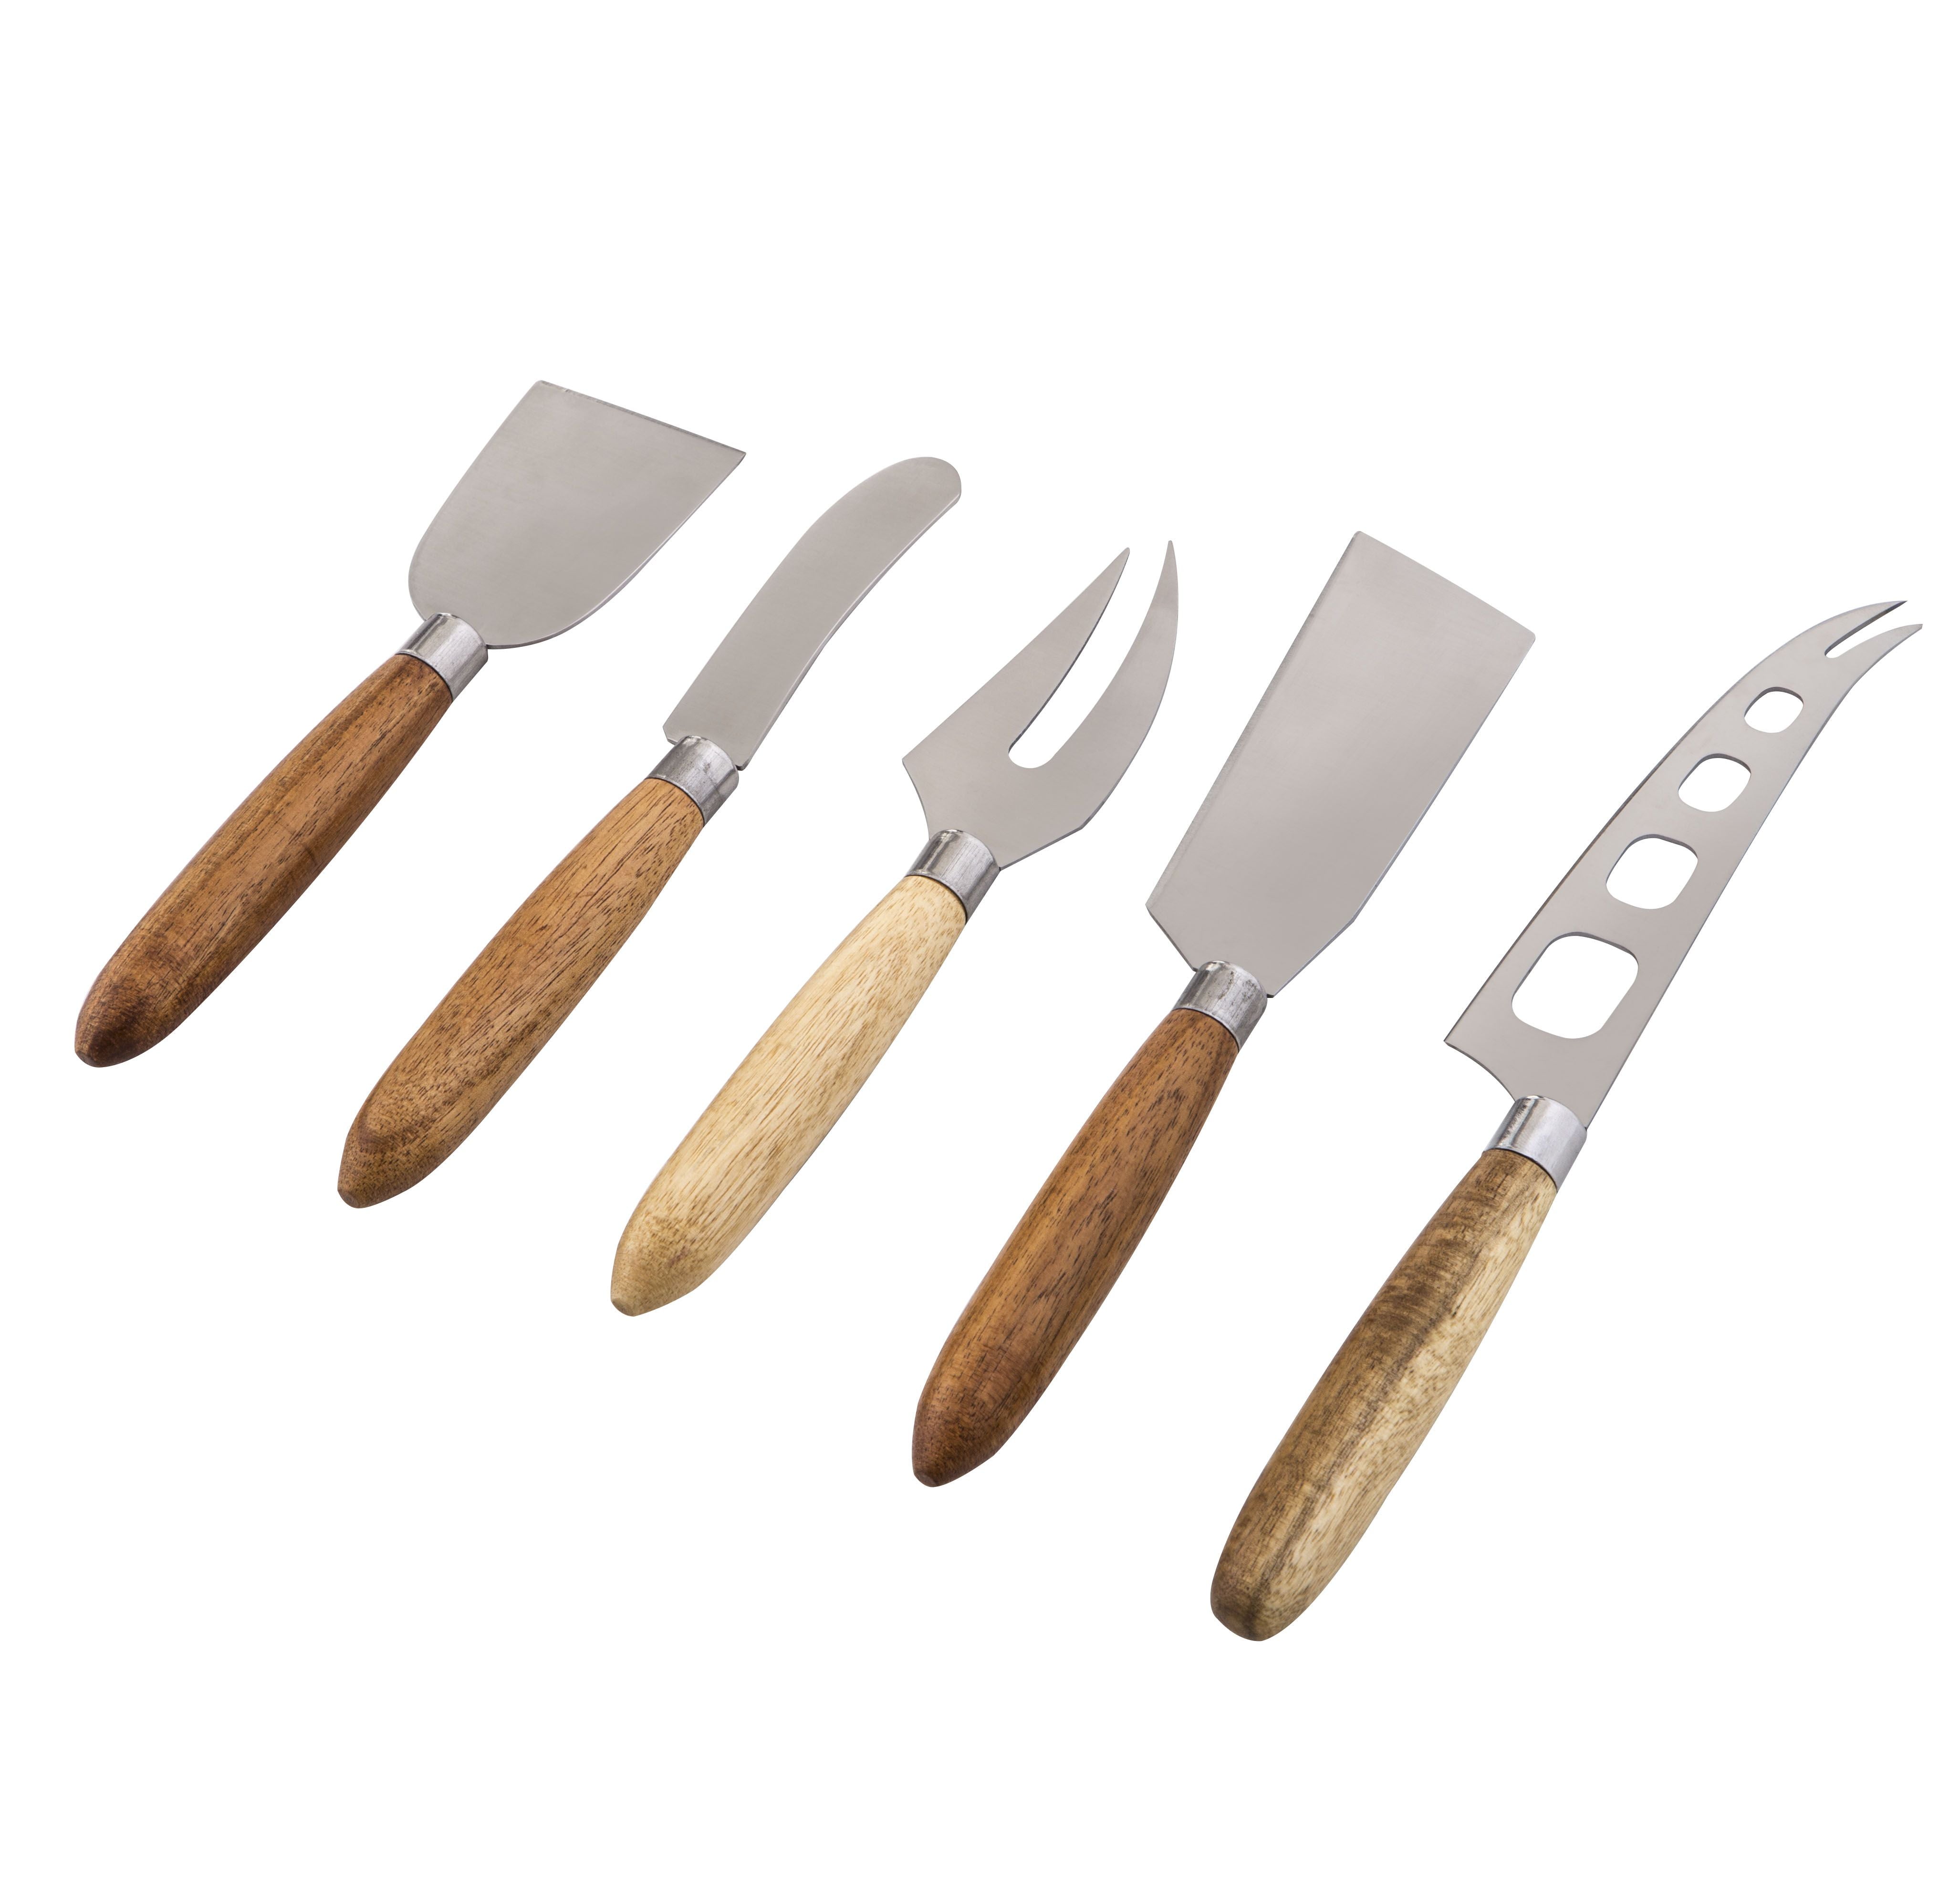 Acacia Cheese Knife Five Piece Set